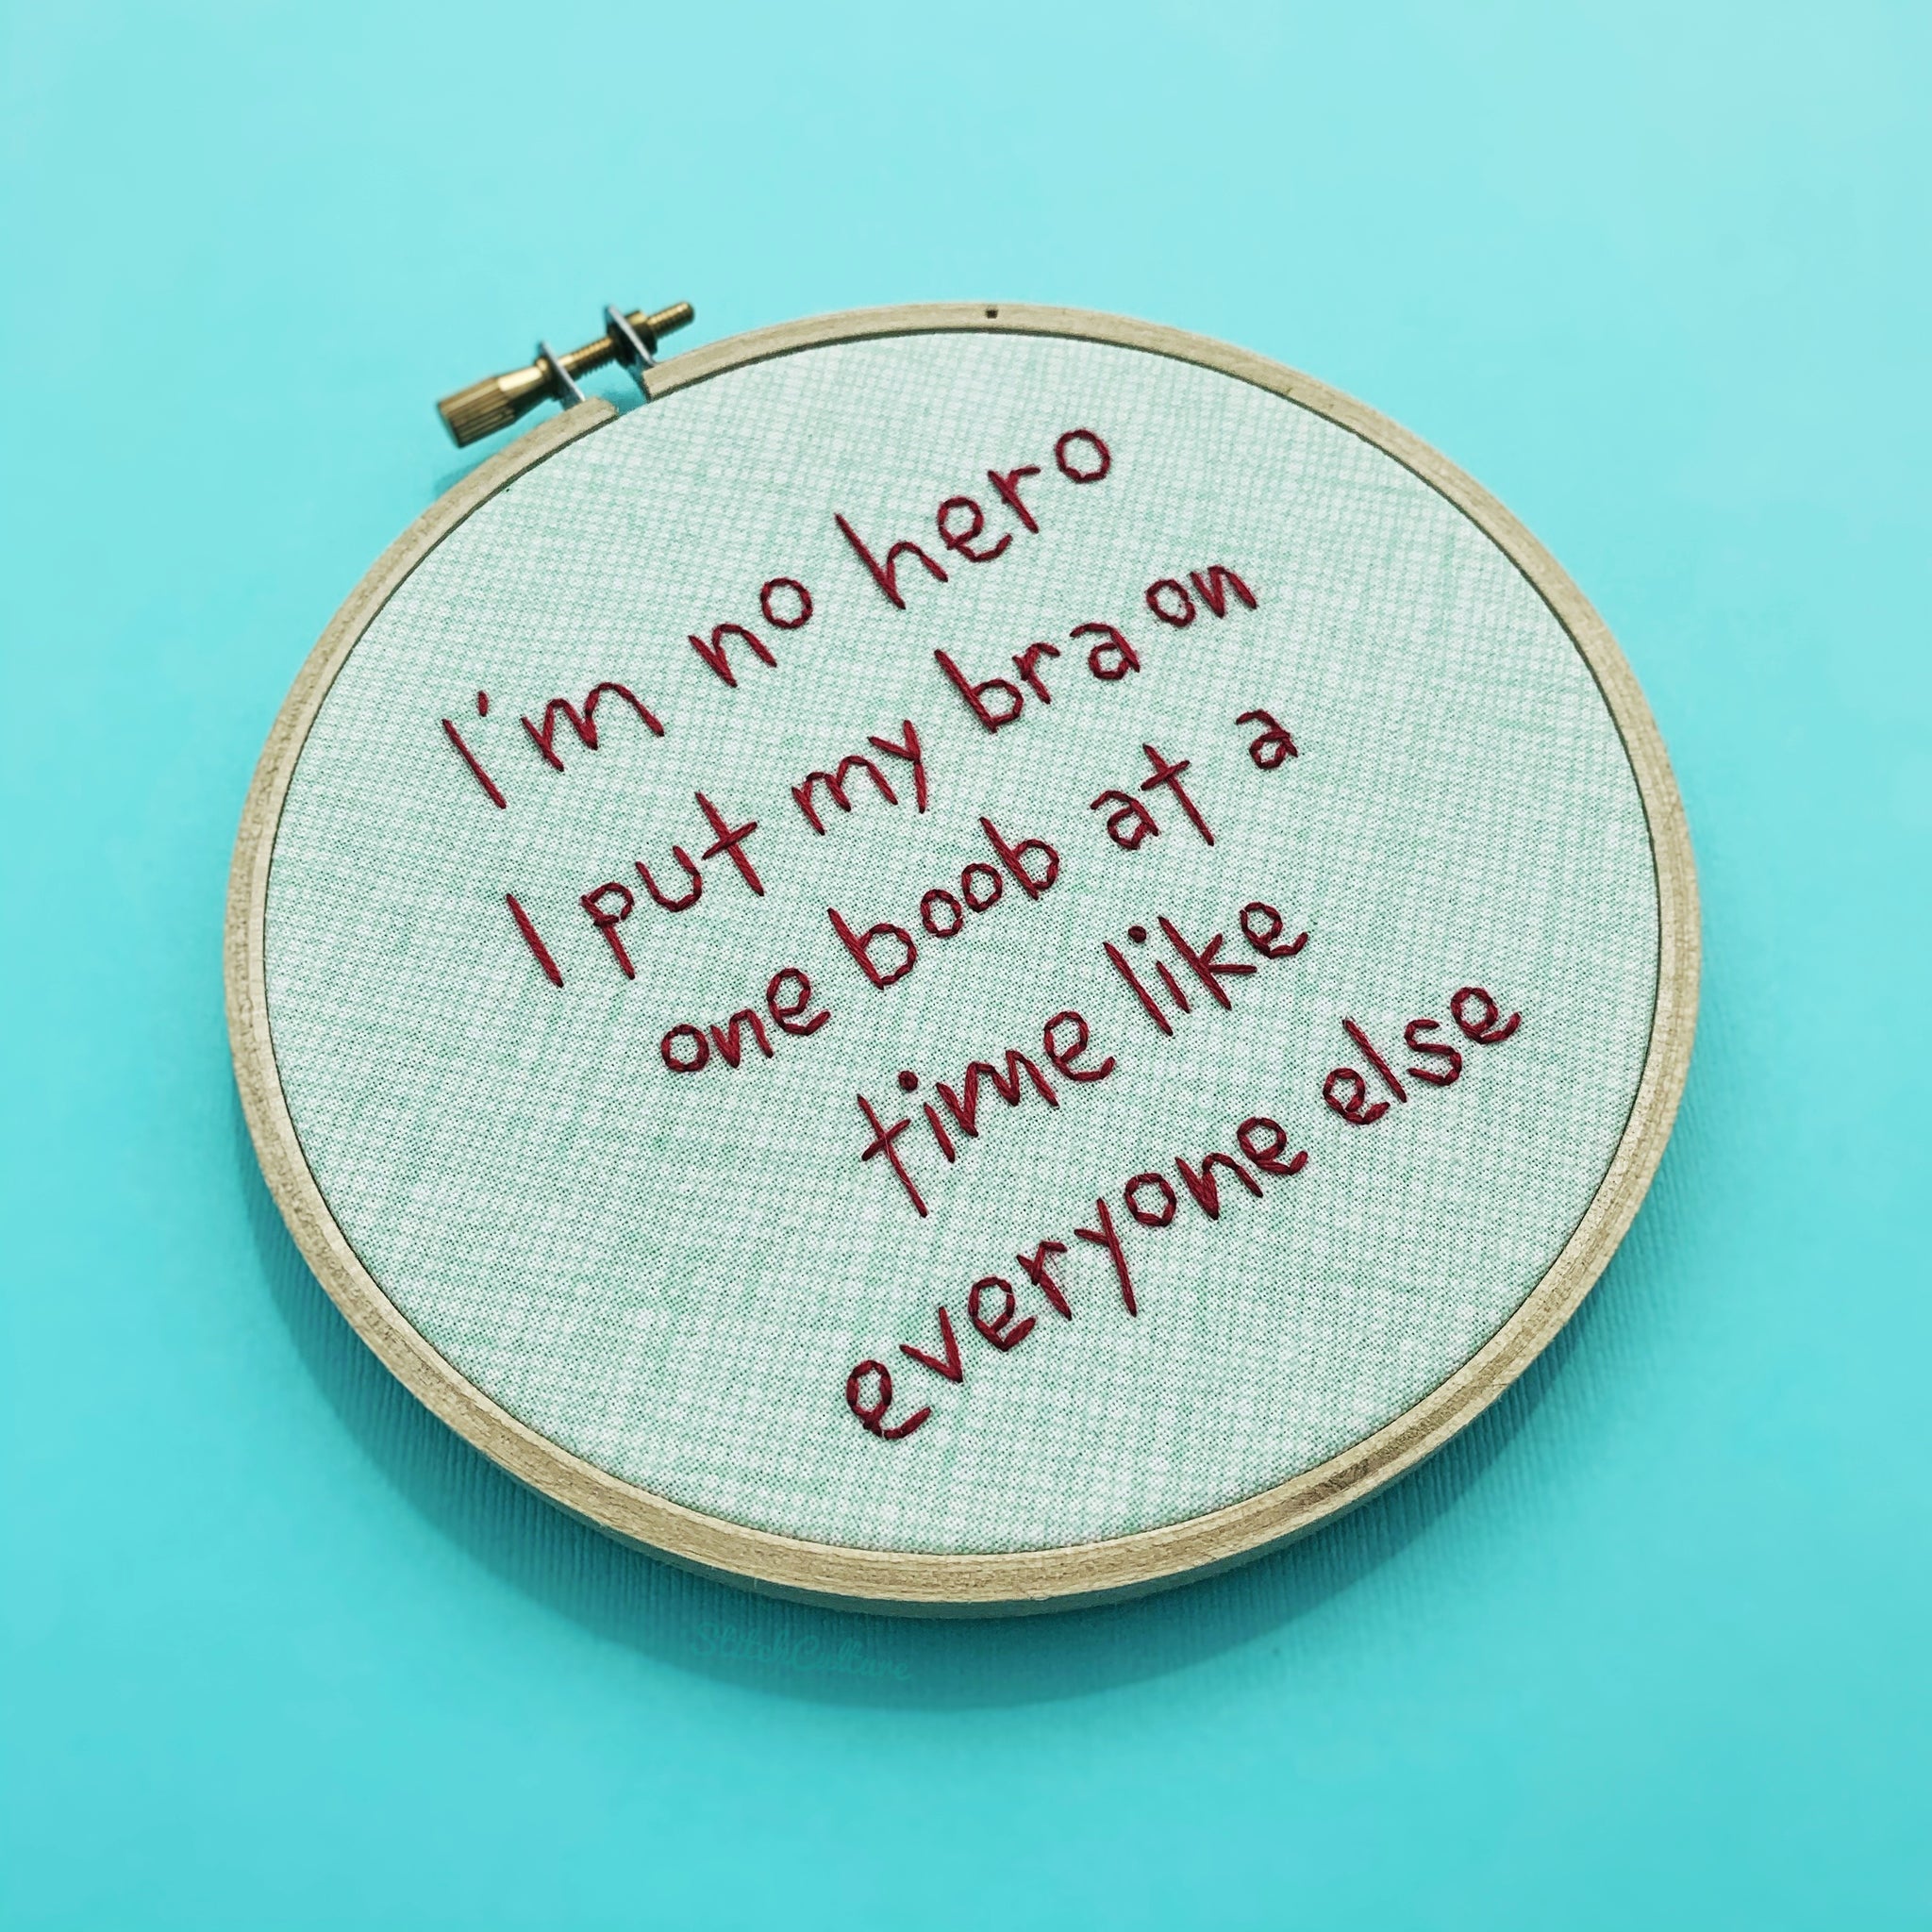 I'M NO HERO / Tina Belcher, Bob's Burgers embroidery hoop